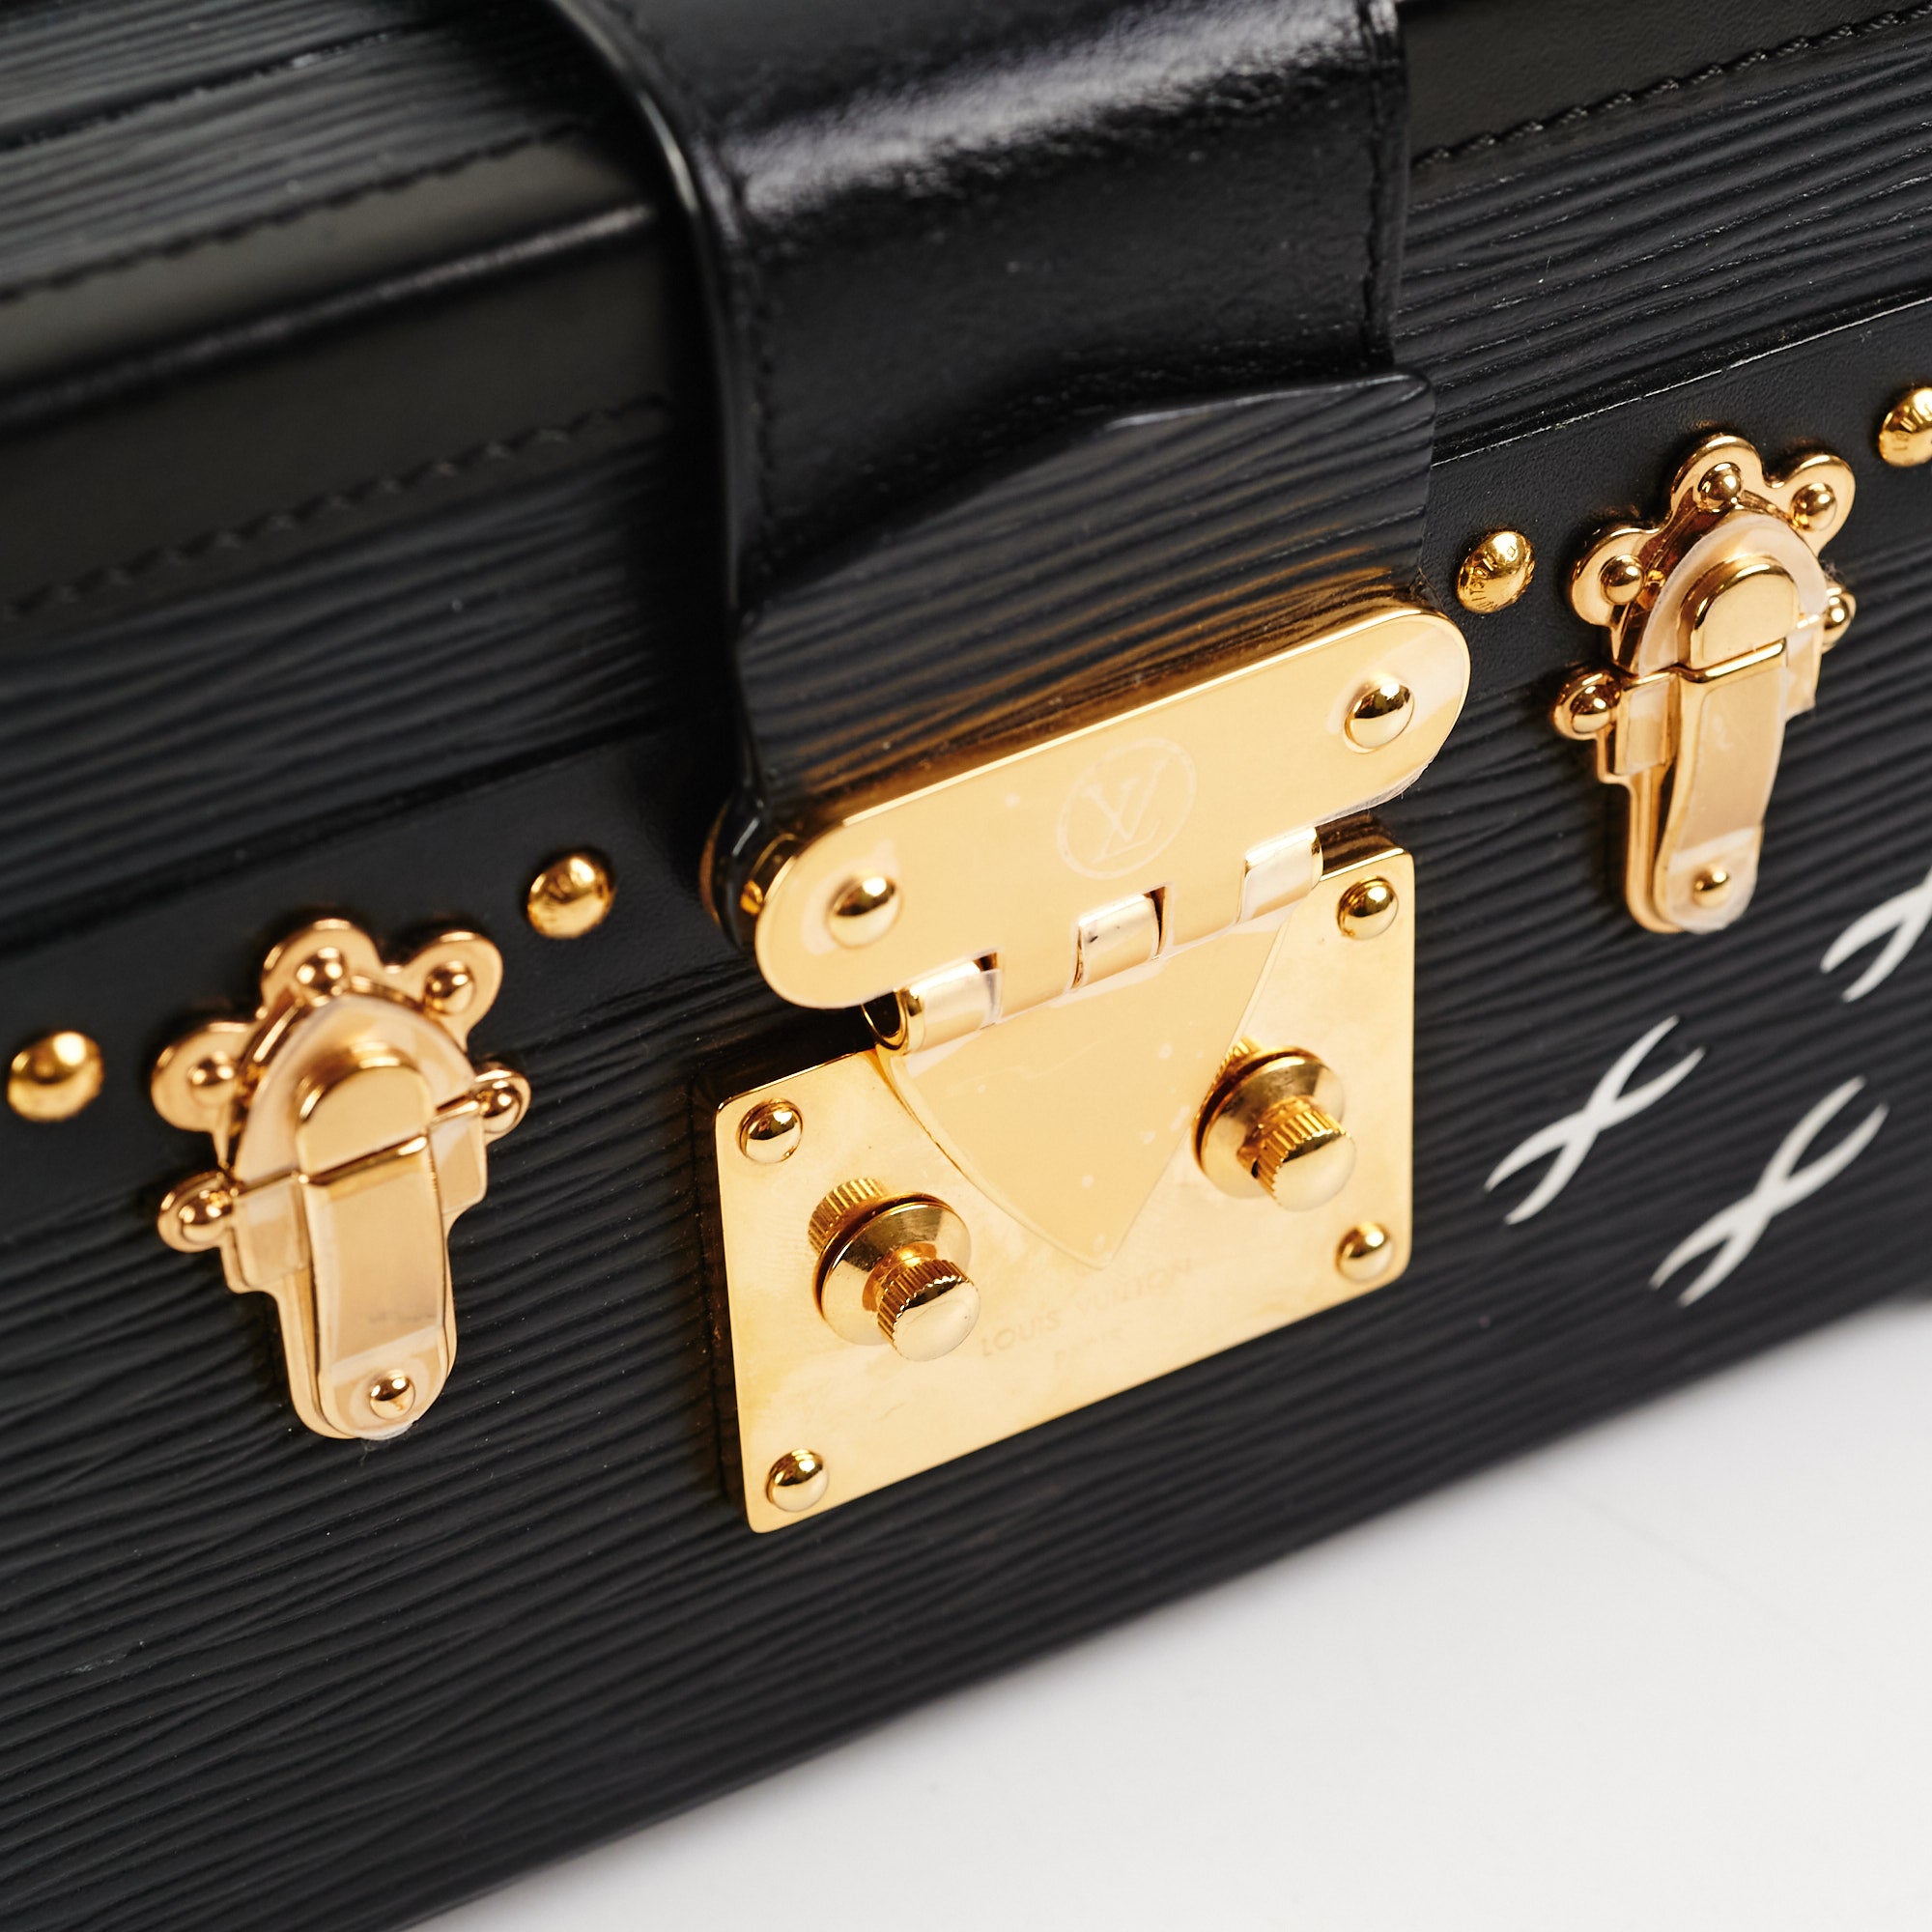 Petite malle leather handbag Louis Vuitton Black in Leather - 19936319